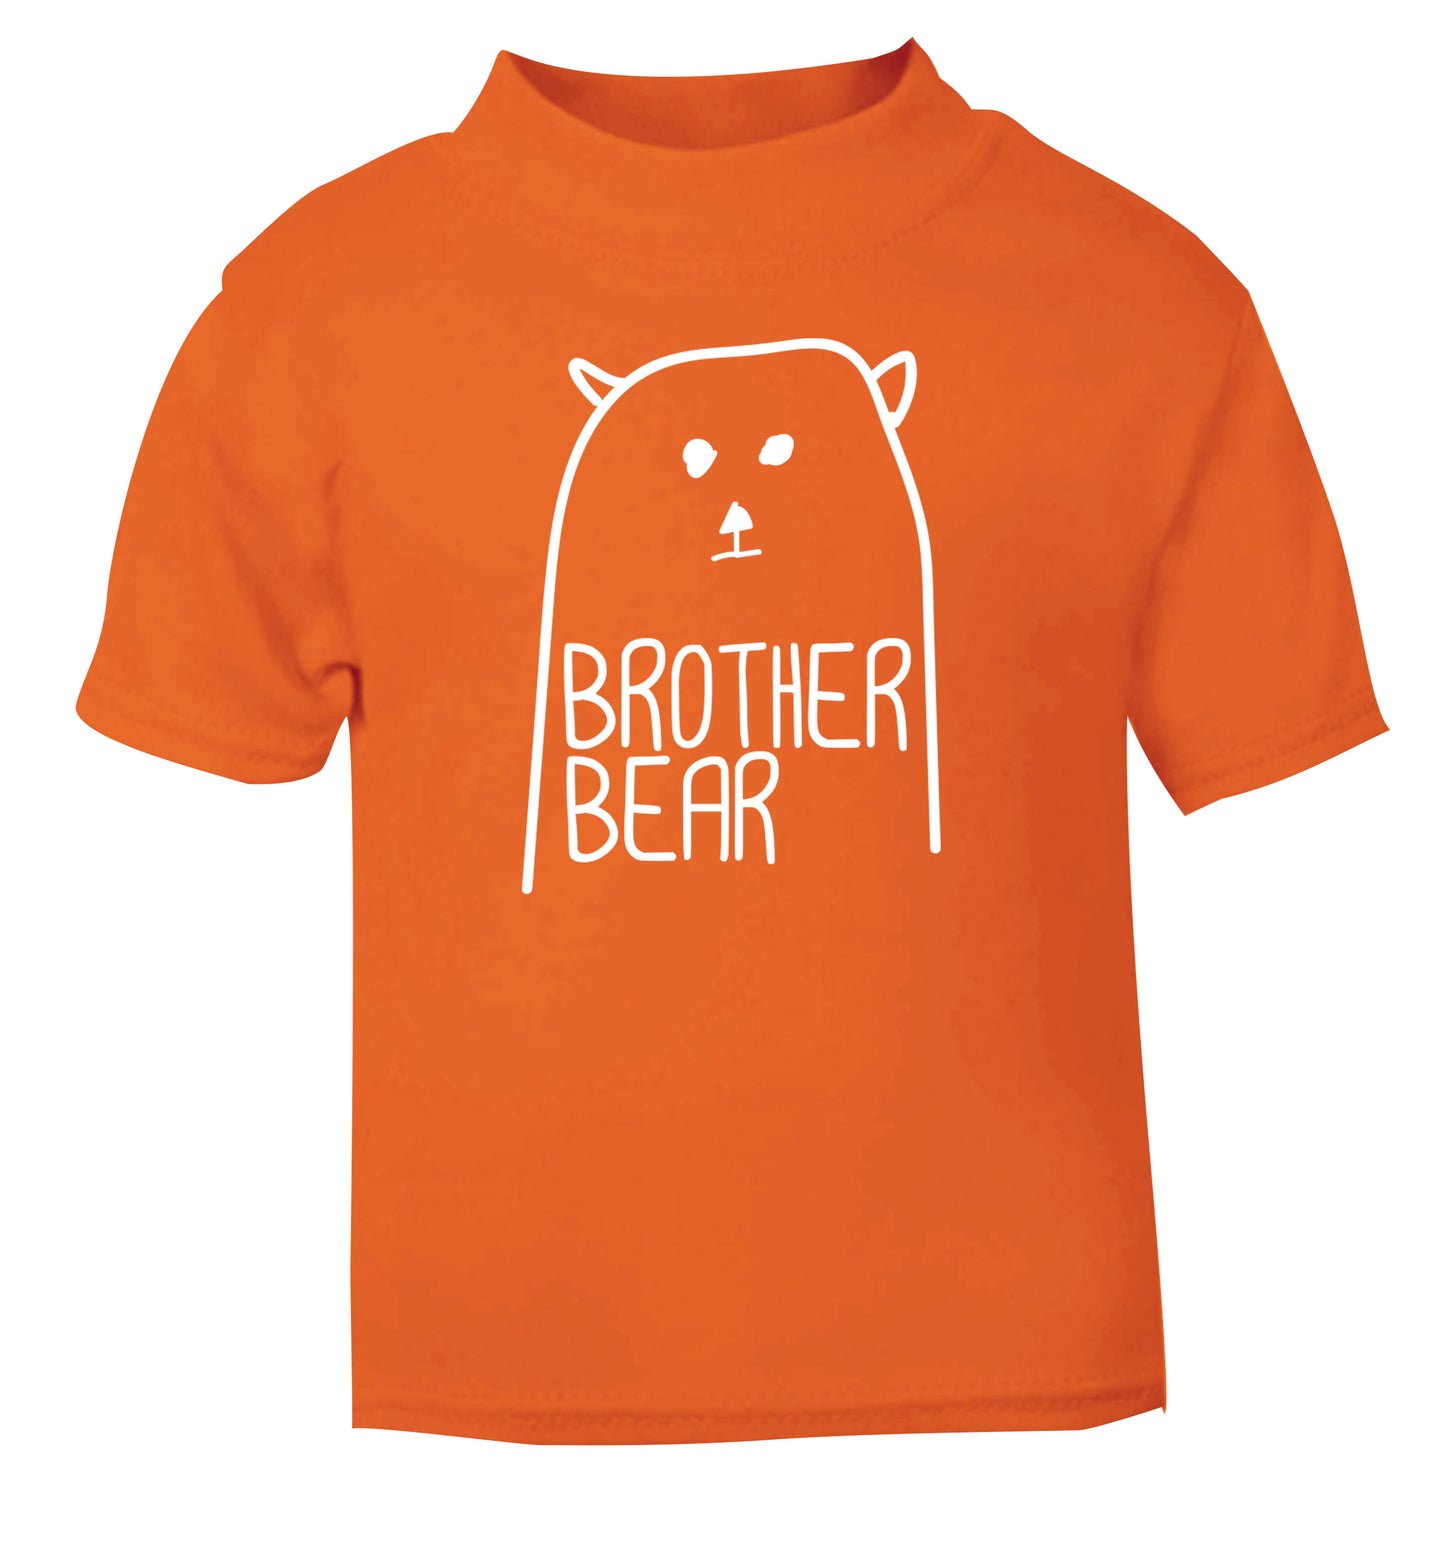 Brother bear orange Baby Toddler Tshirt 2 Years